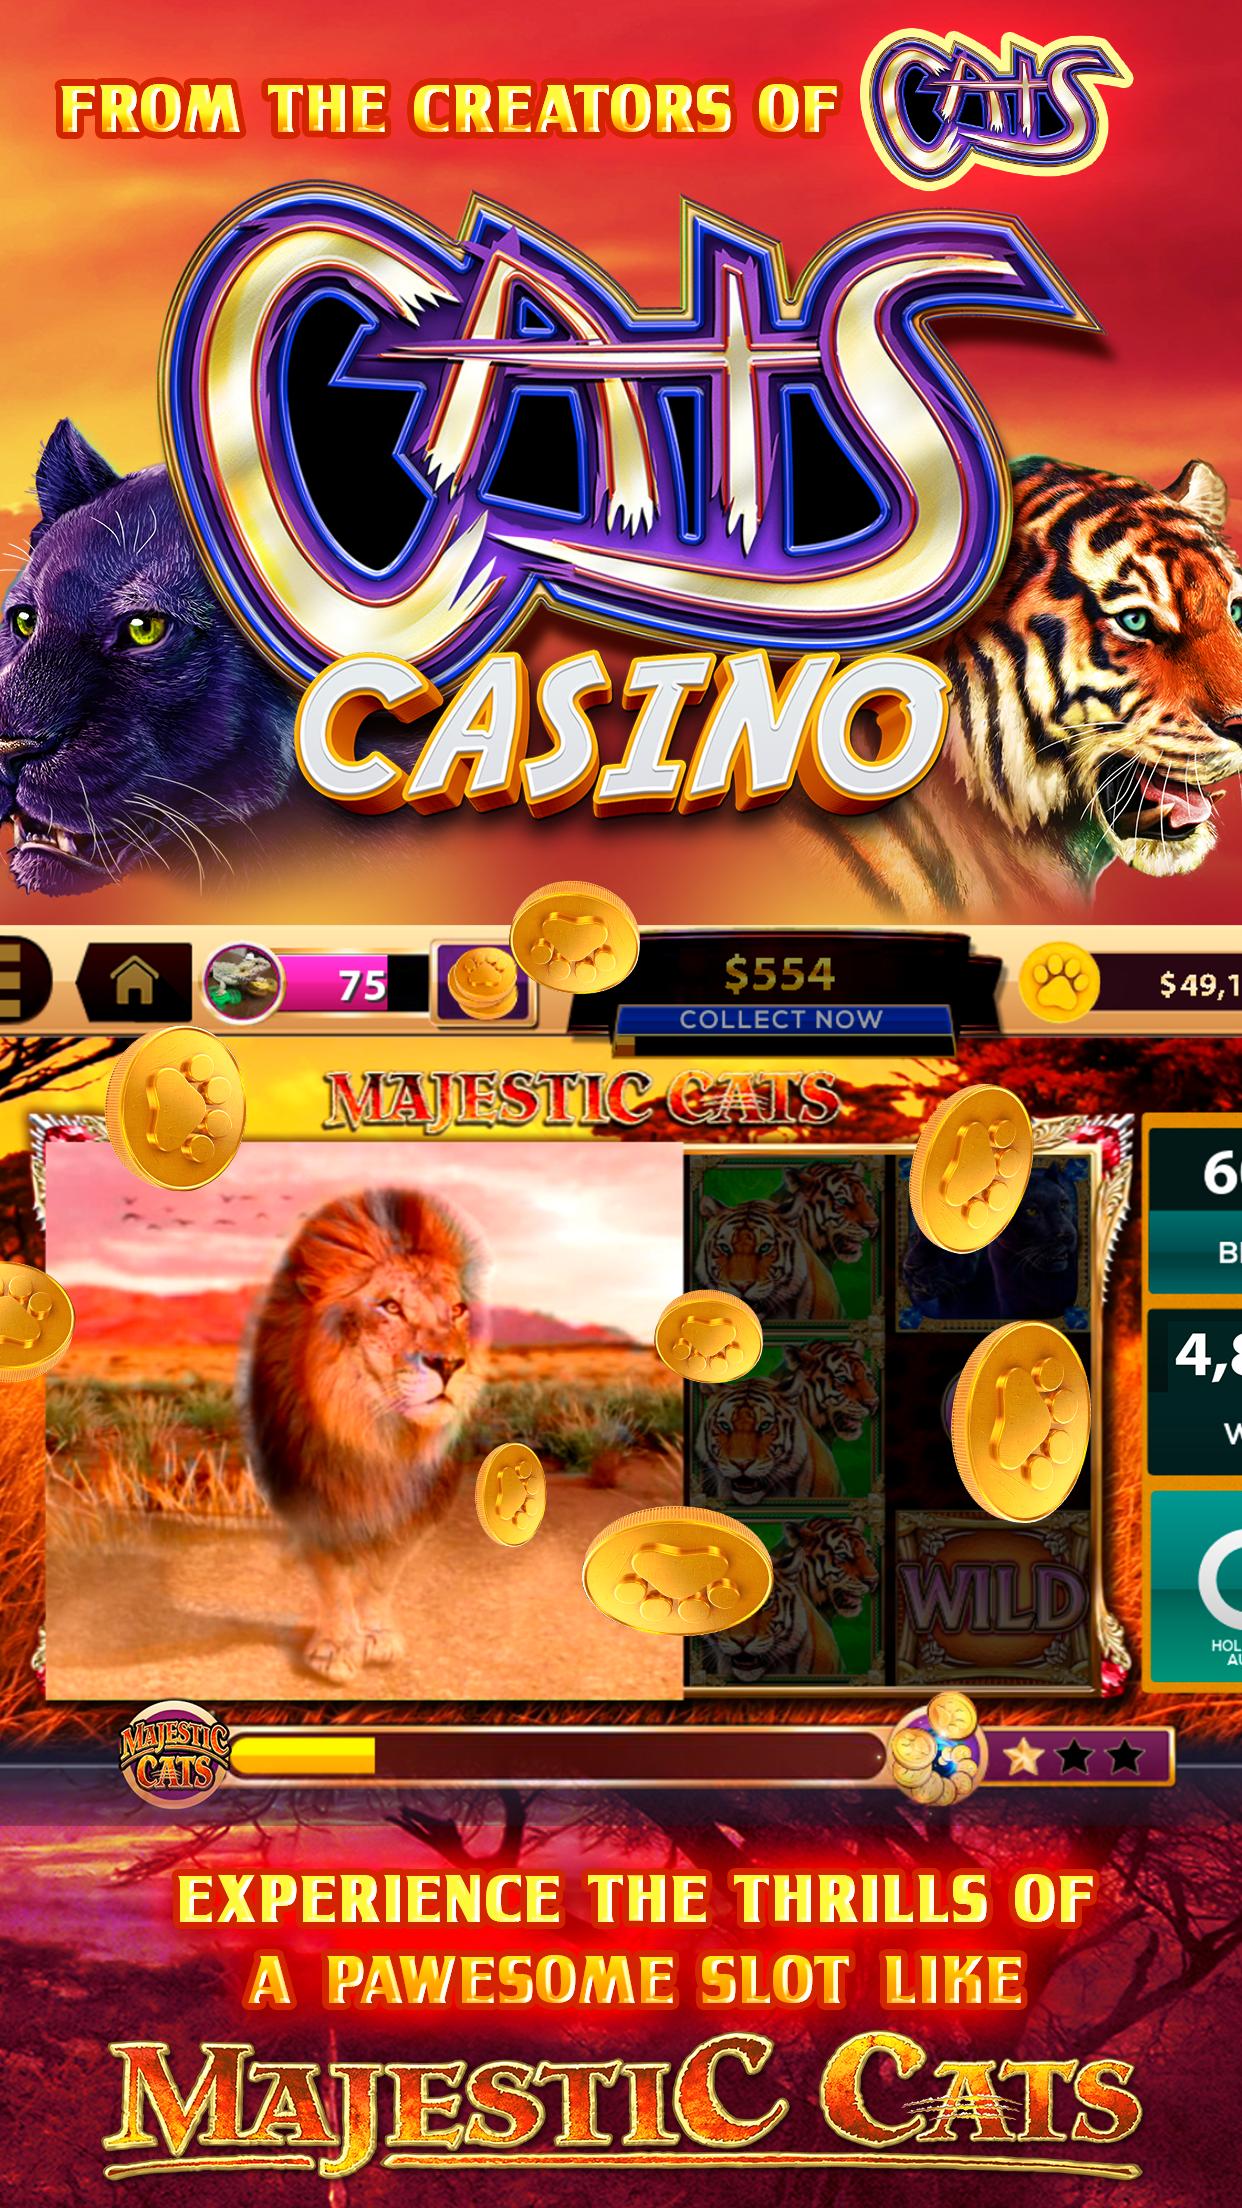 Royal panda casino uk | Profile